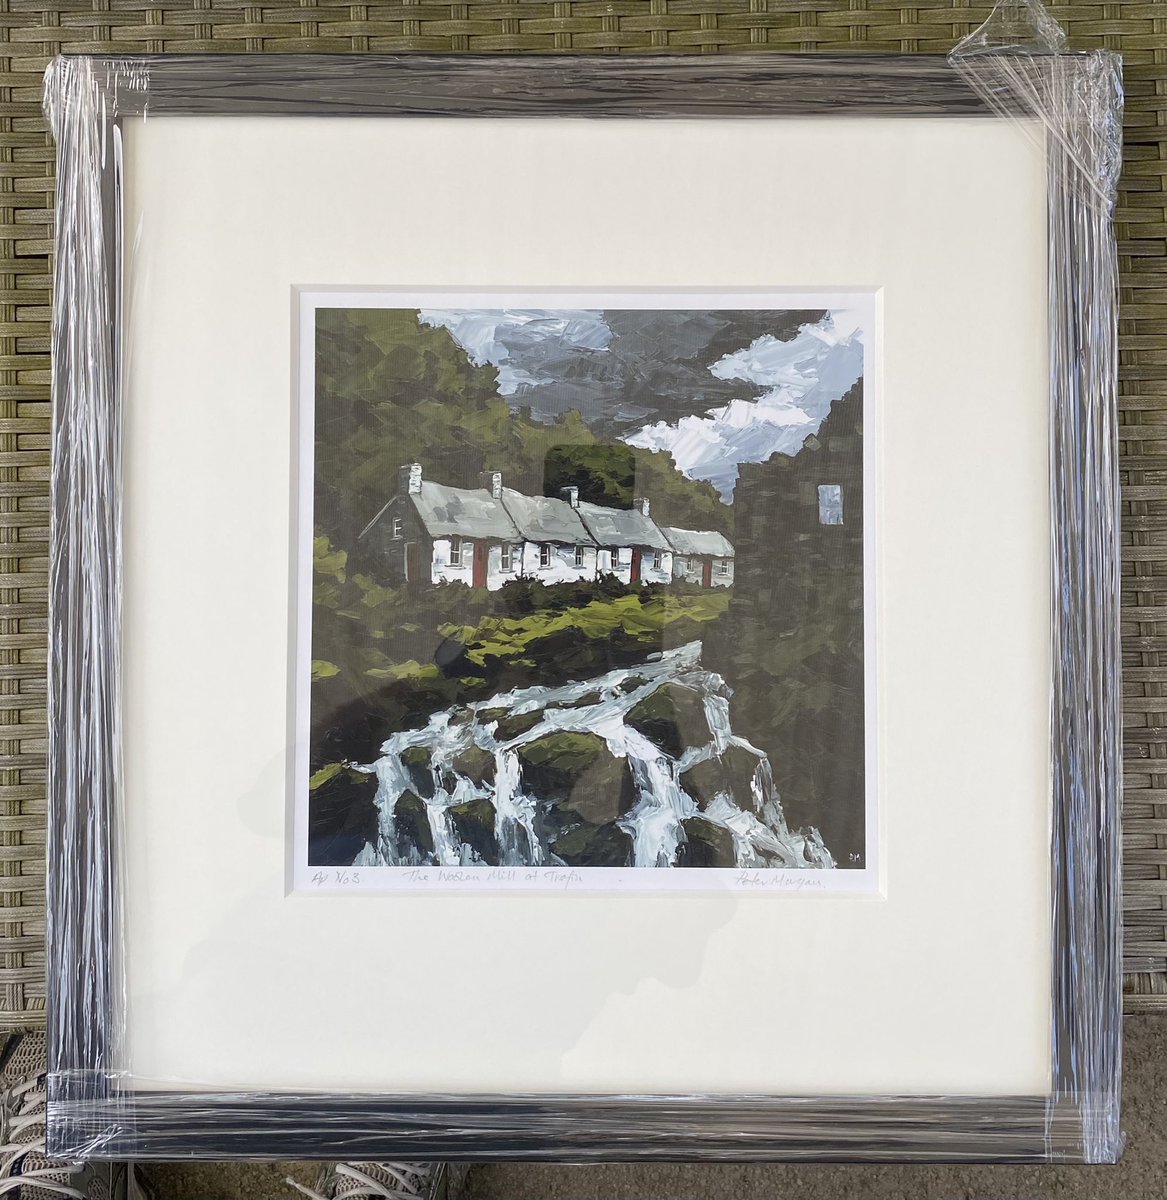 The Woolwn Mill - Trefin - prints #trefin #trefincottages #printmaking #peterdmorgan #stormwater #paintingwater #welshart #cymru #pembrokeshire #kadinskyartandframing